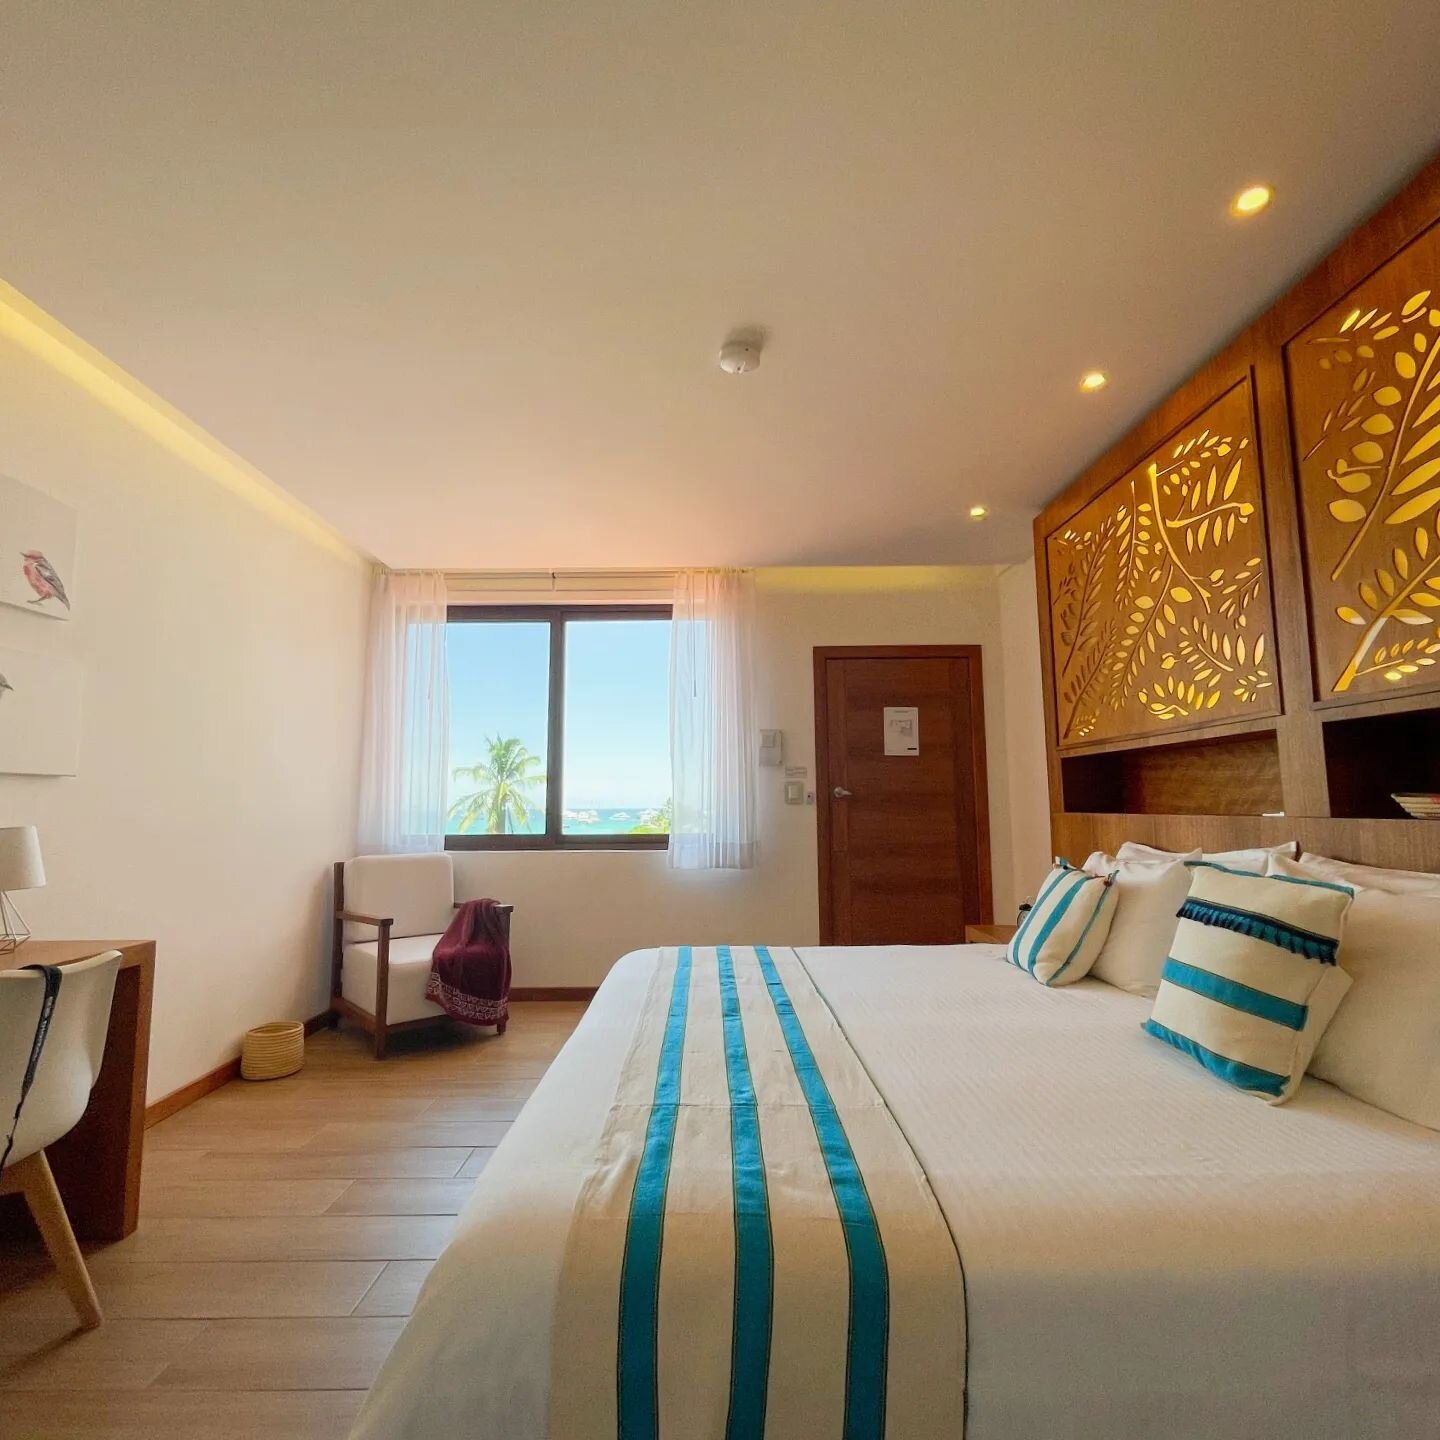 Acacia's style is truly unique 💙

#boutiquehotel #galapagos #beautifulhotels #hotelroom #bucketlisttravel #visitecuador #travelsouthamerica #galapagosislands #ecuador🇪🇨 #ecoturismo